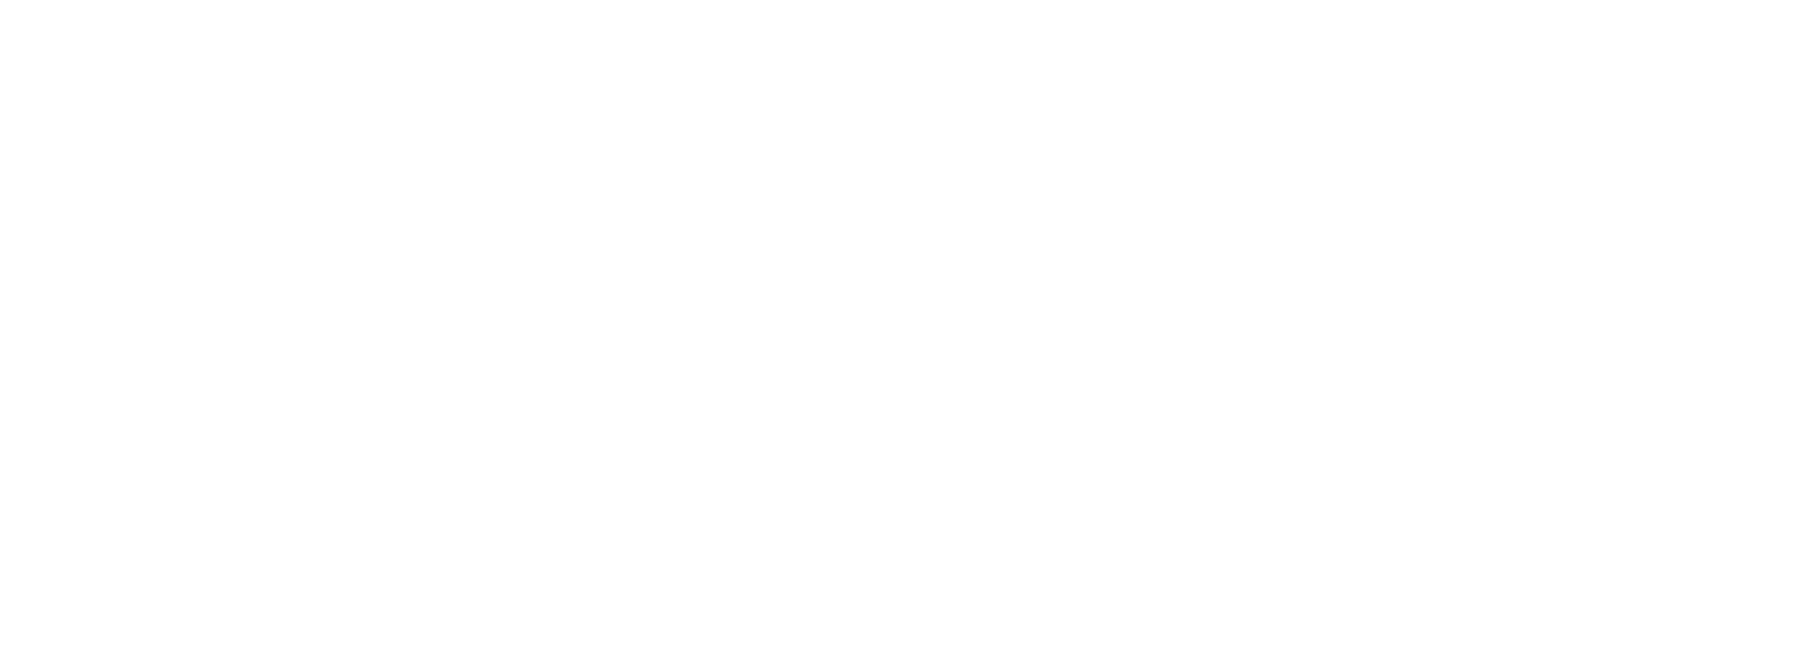 who designed ibm logo